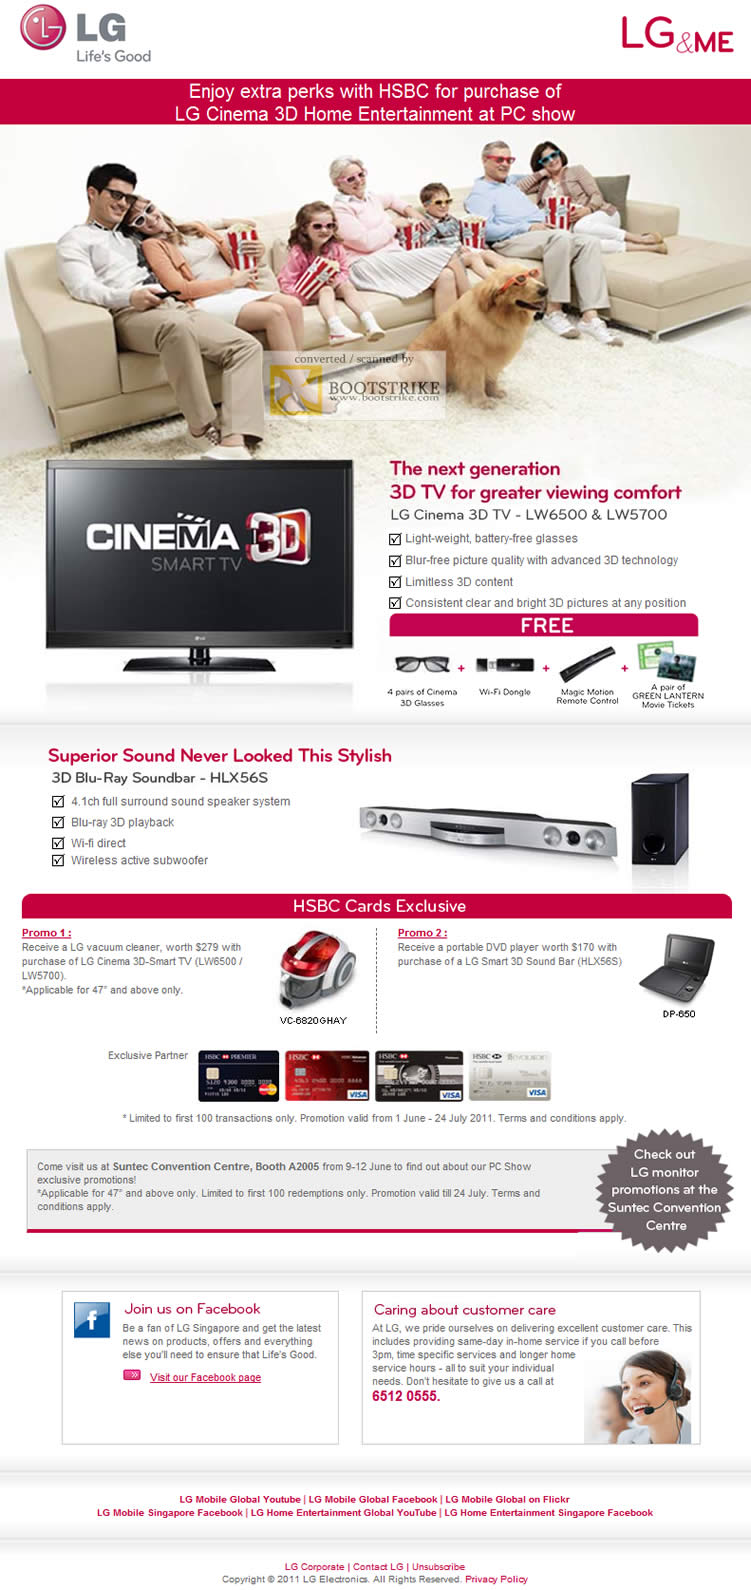 PC Show 2011 price list image brochure of LG HSBC Cinema 3D TV LW6500 LW5700 Free Vacuum Cleaner Portable DVD Player Soundbar Blu Ray HLX56S